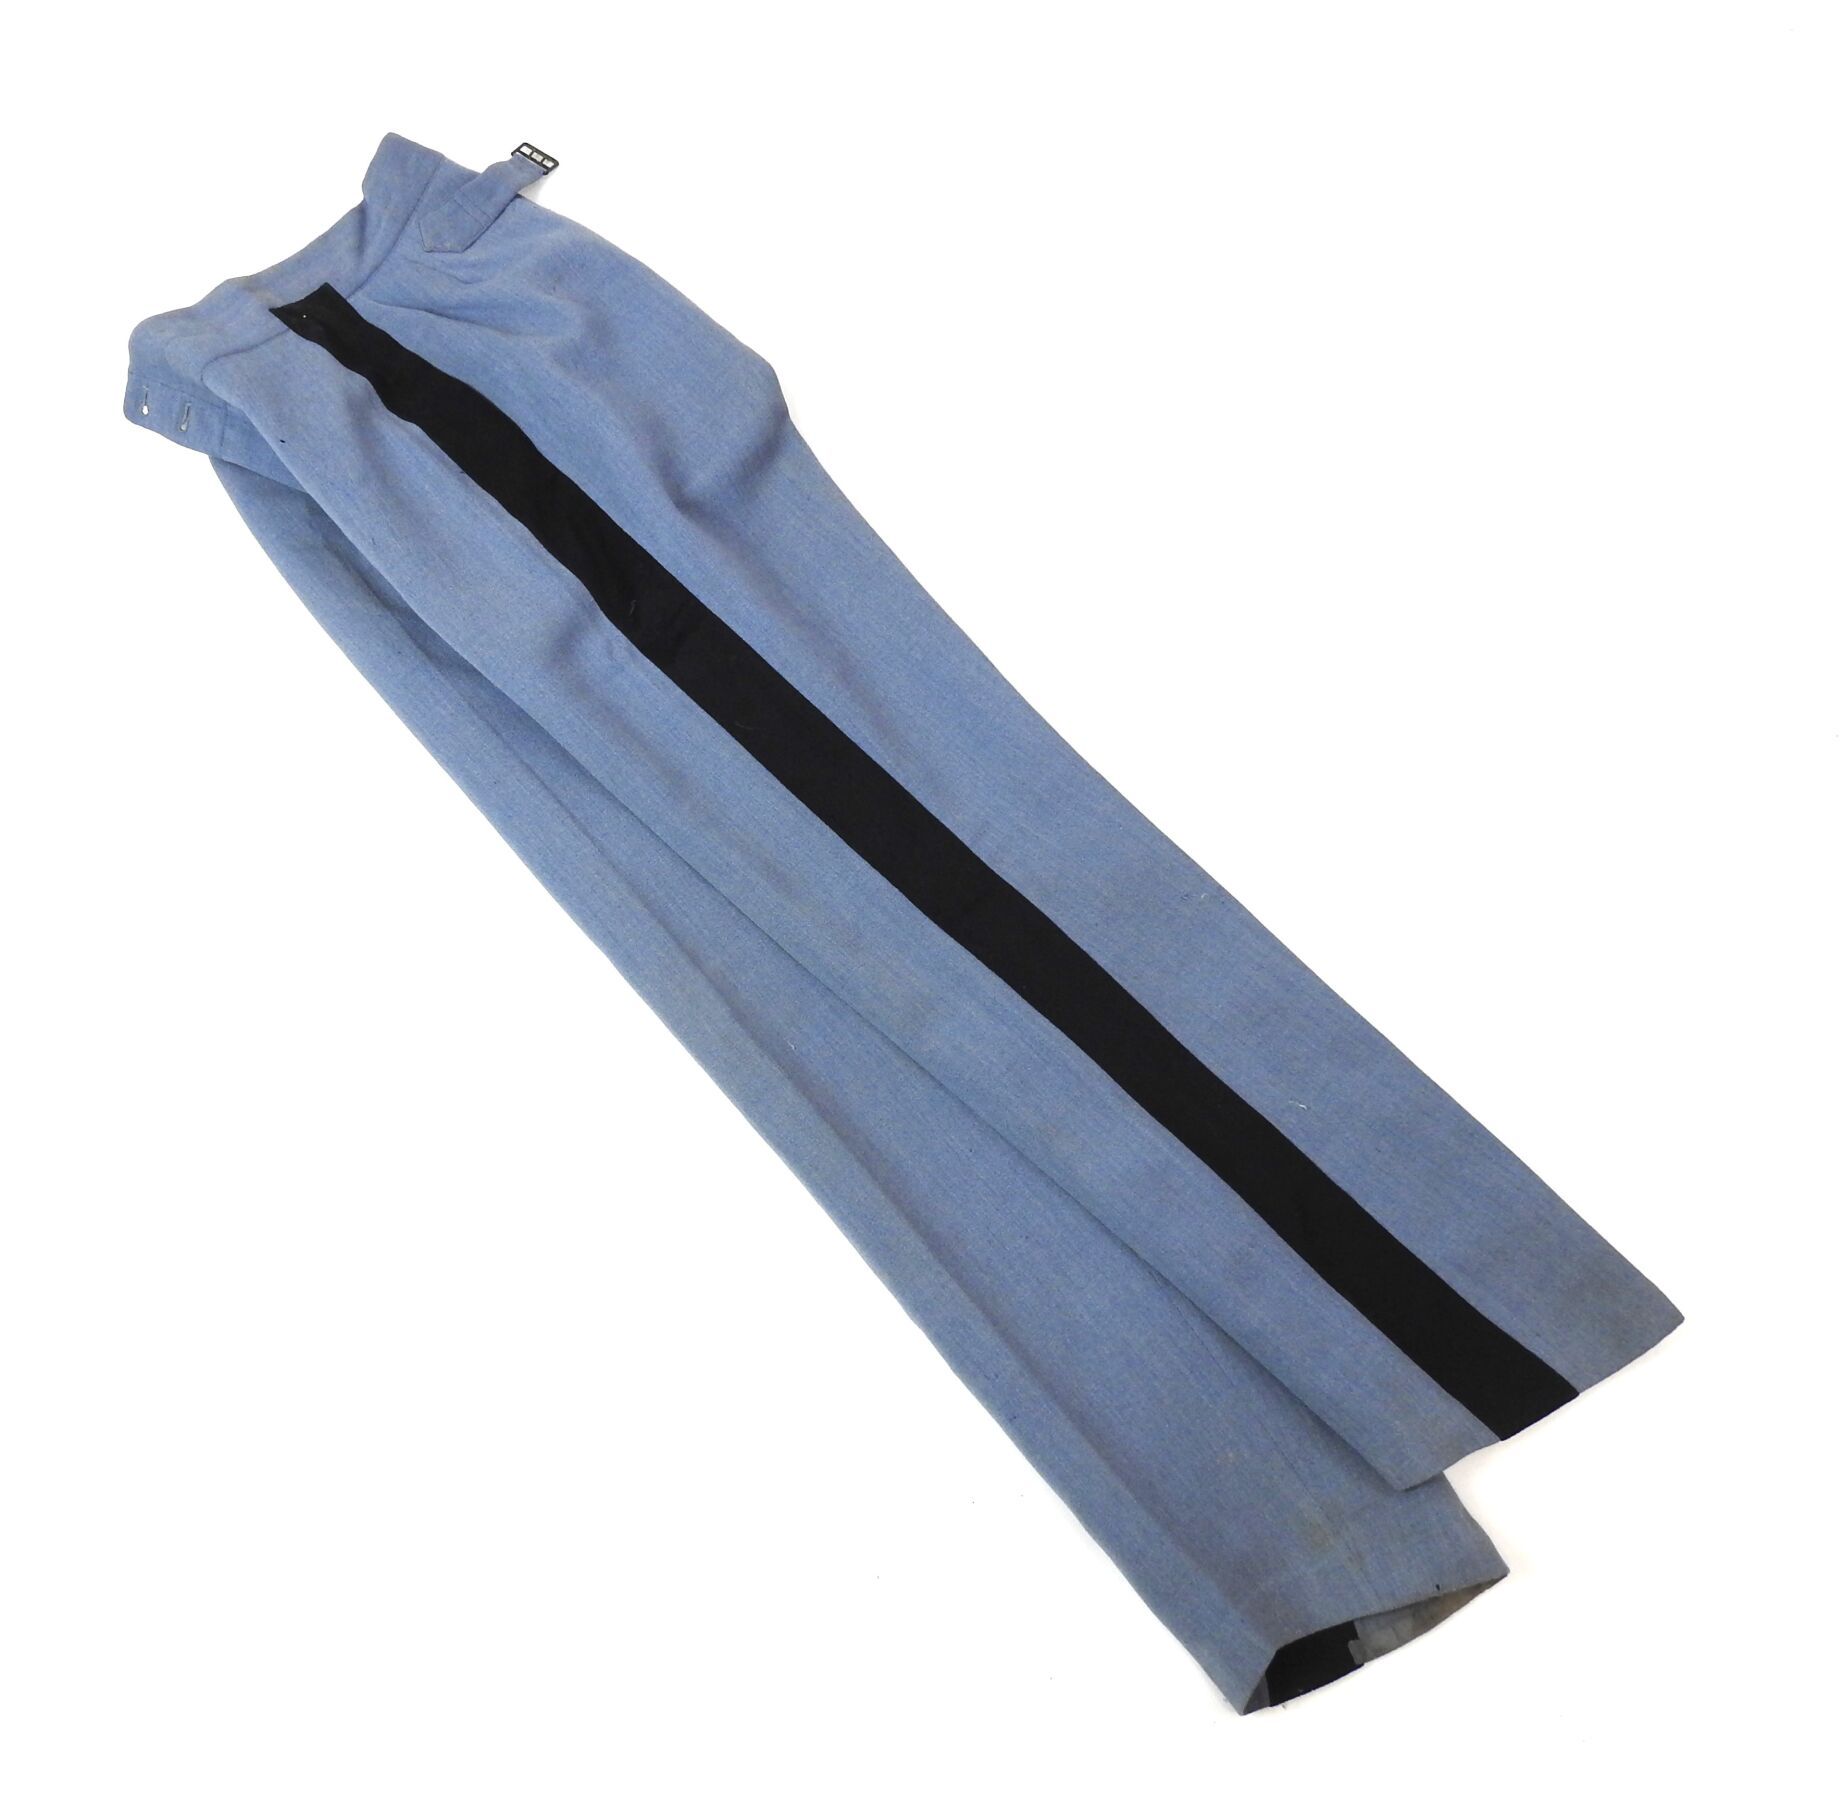 Null 杂项。1921年款制服直筒裤，上等地平线蓝布，侧面有深蓝色条纹，名称为。TBE